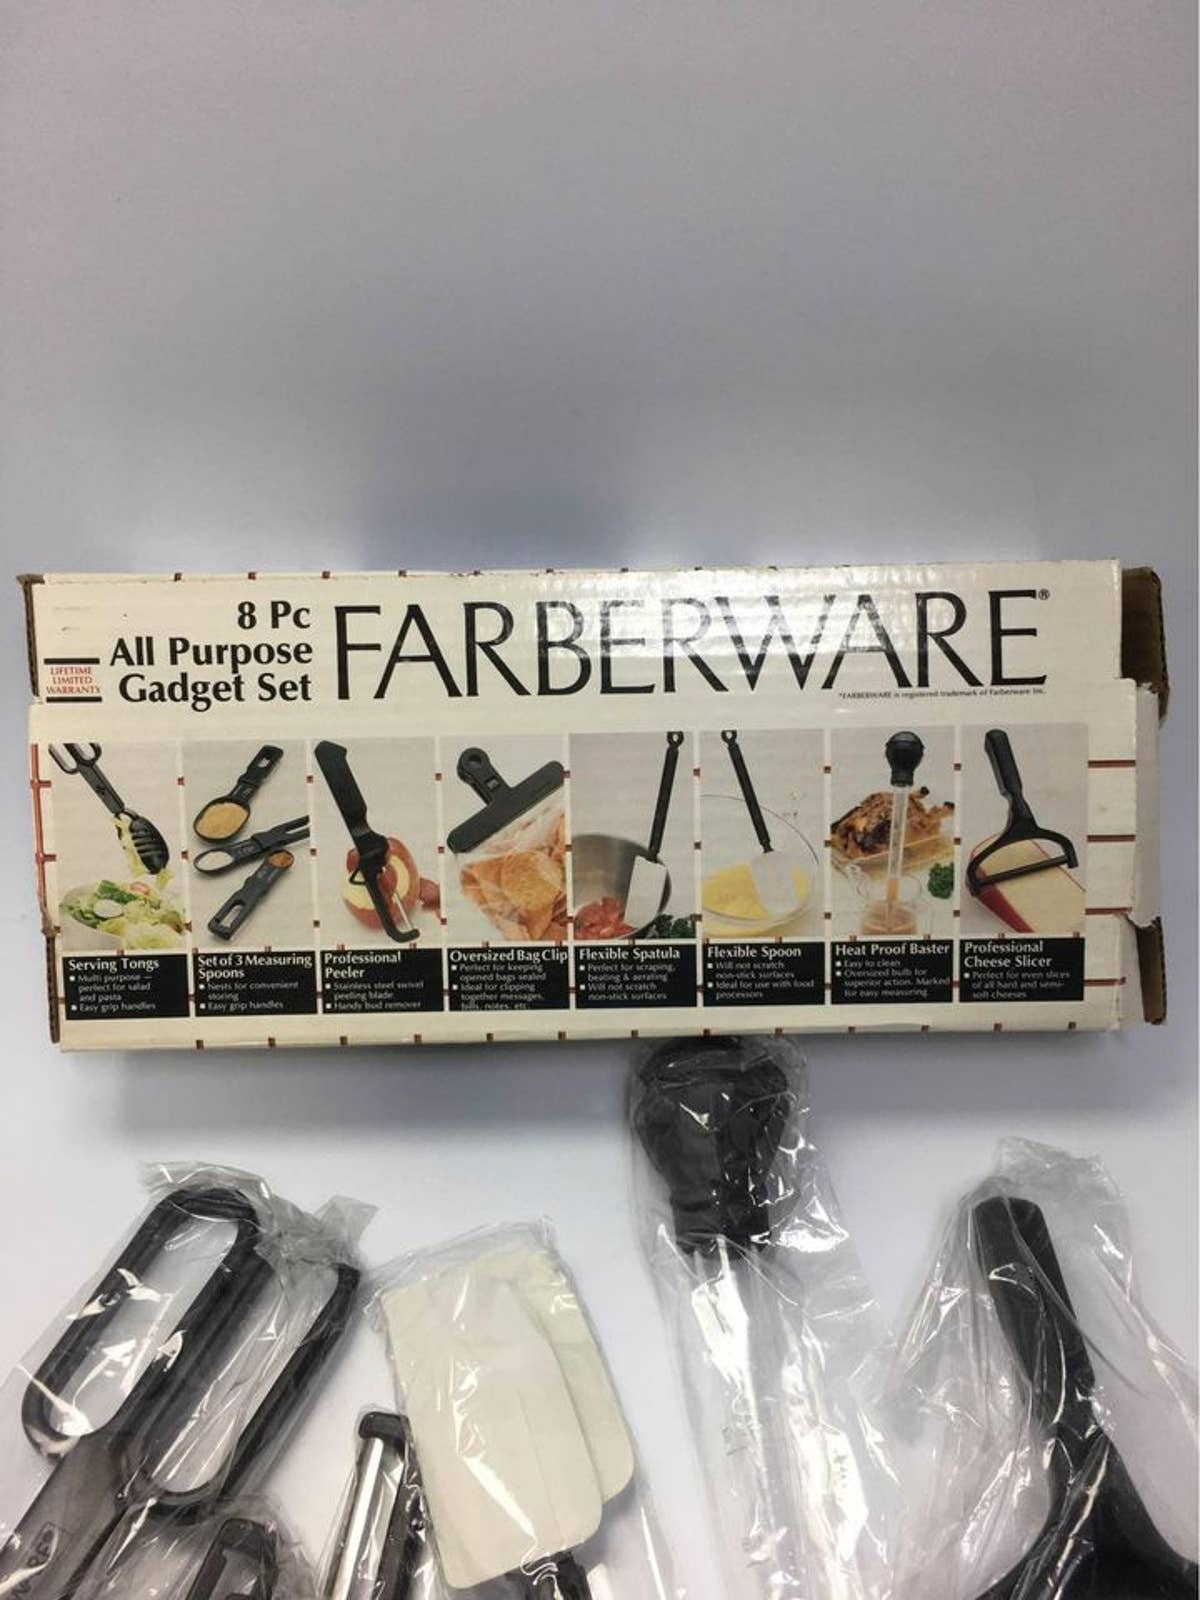 Farberware Professional Bag Clips, Set of 6 - 6 bag clips